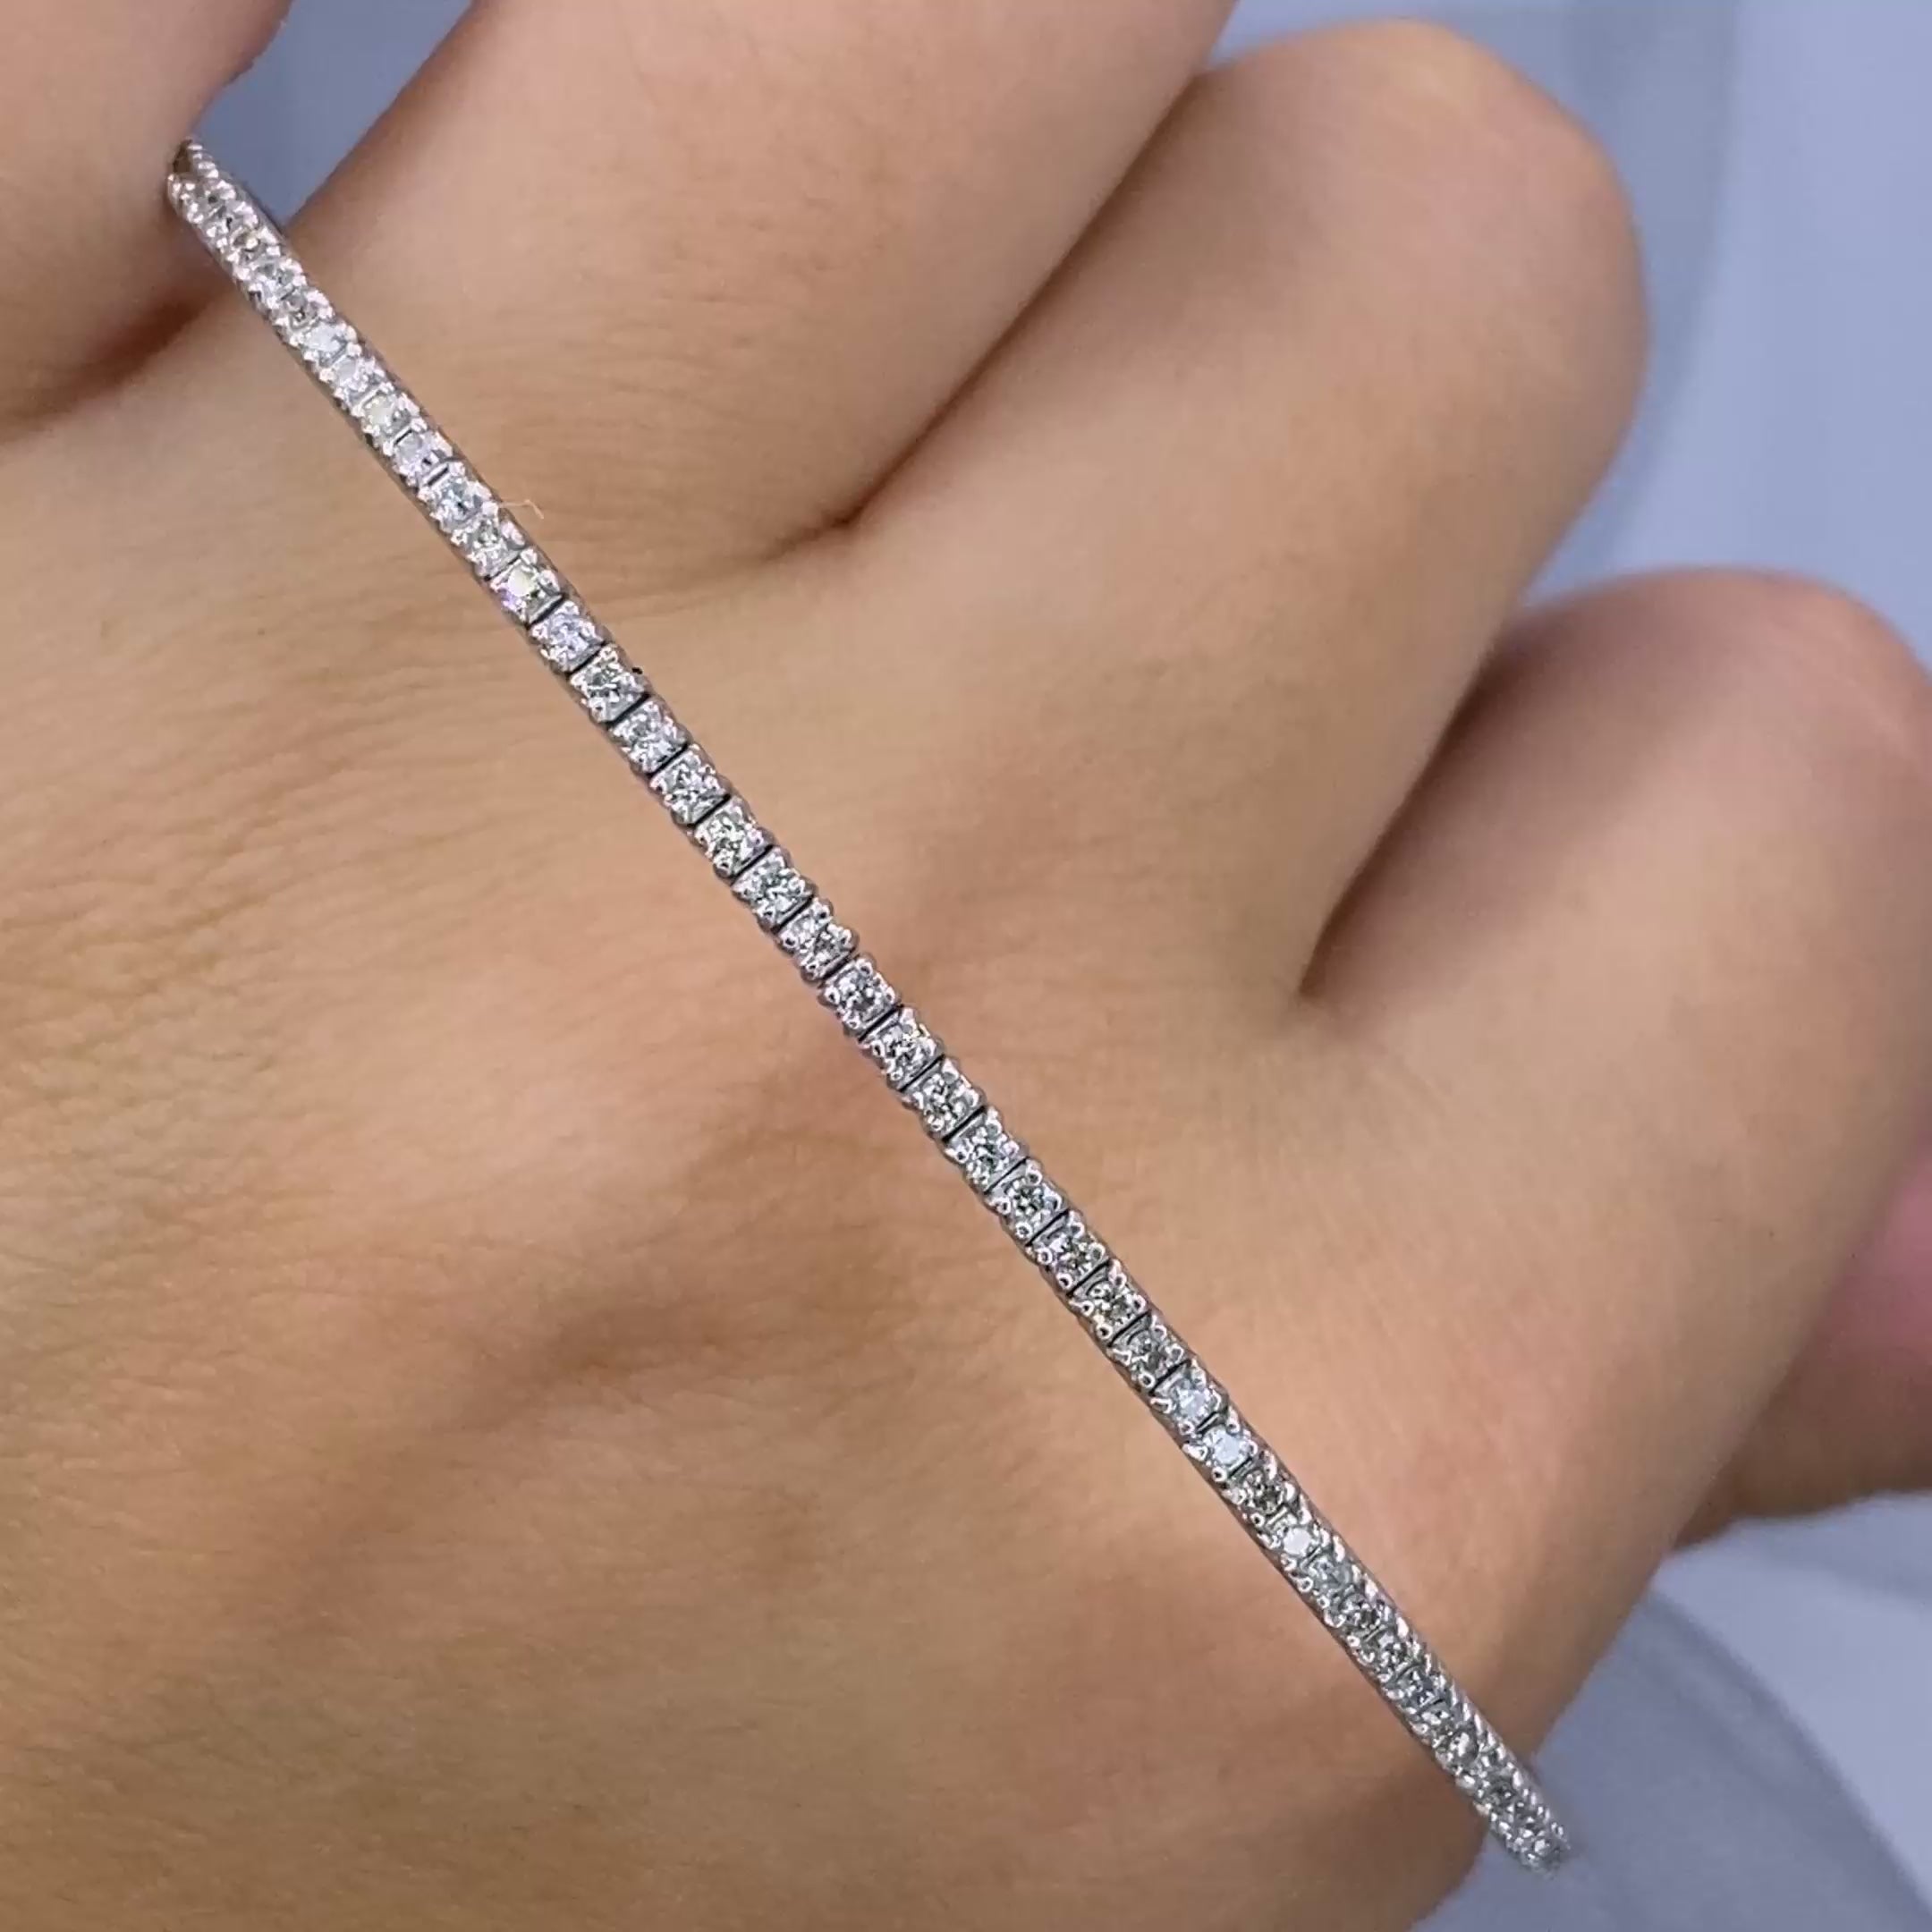 Prestige 0.50CT Round Cut Diamond Flexible Bangle in 14KT White Gold - Flexible Bangle